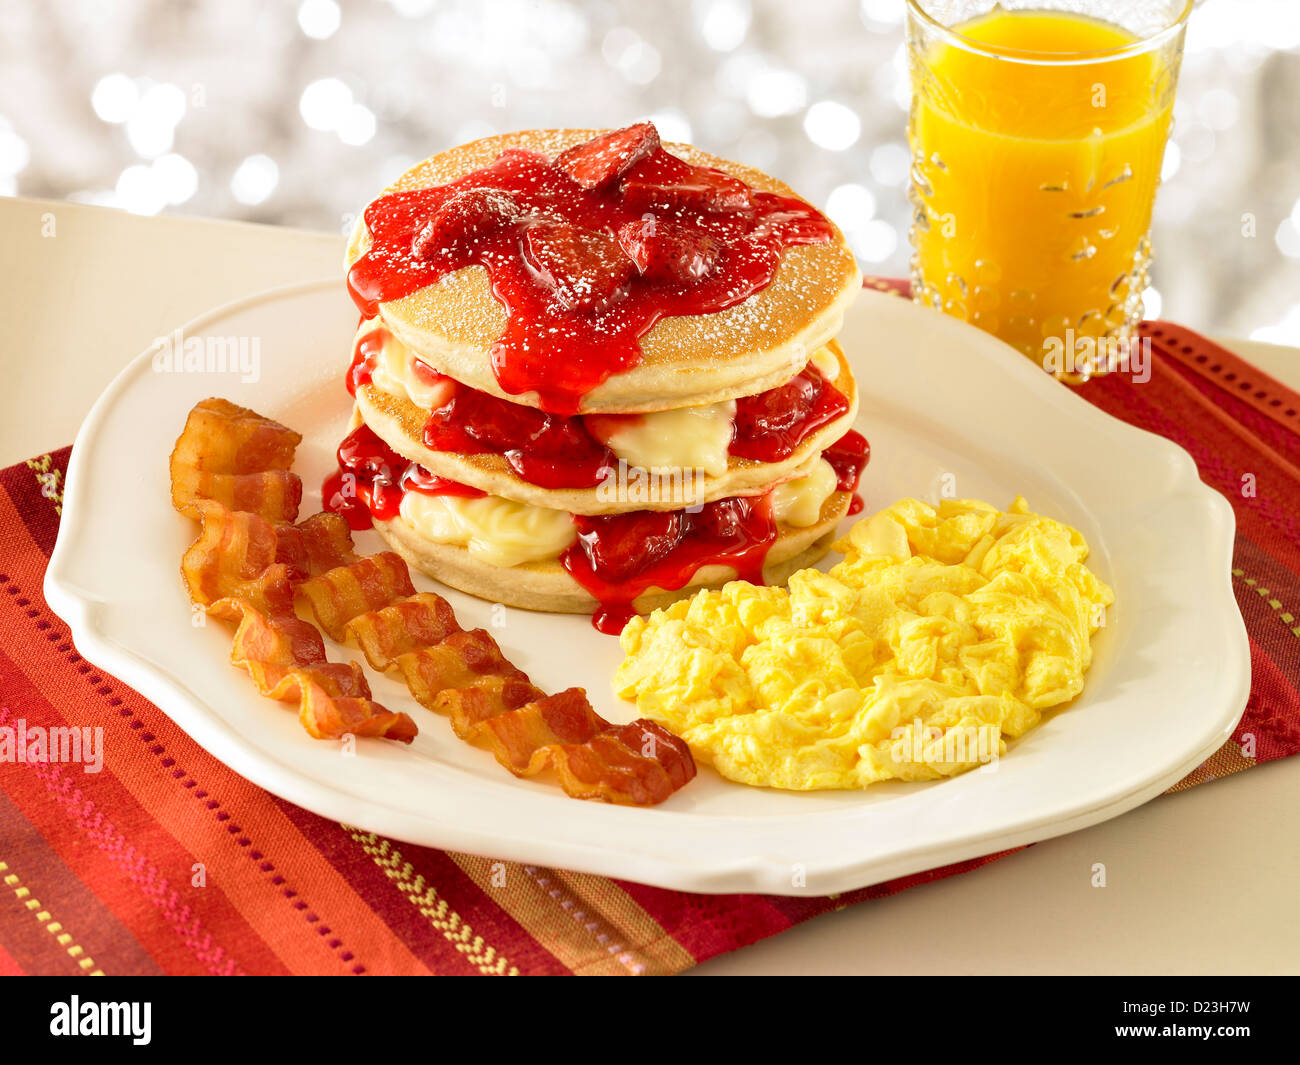 Strawberry stuffed pancake stack with orange juice Stock Photo